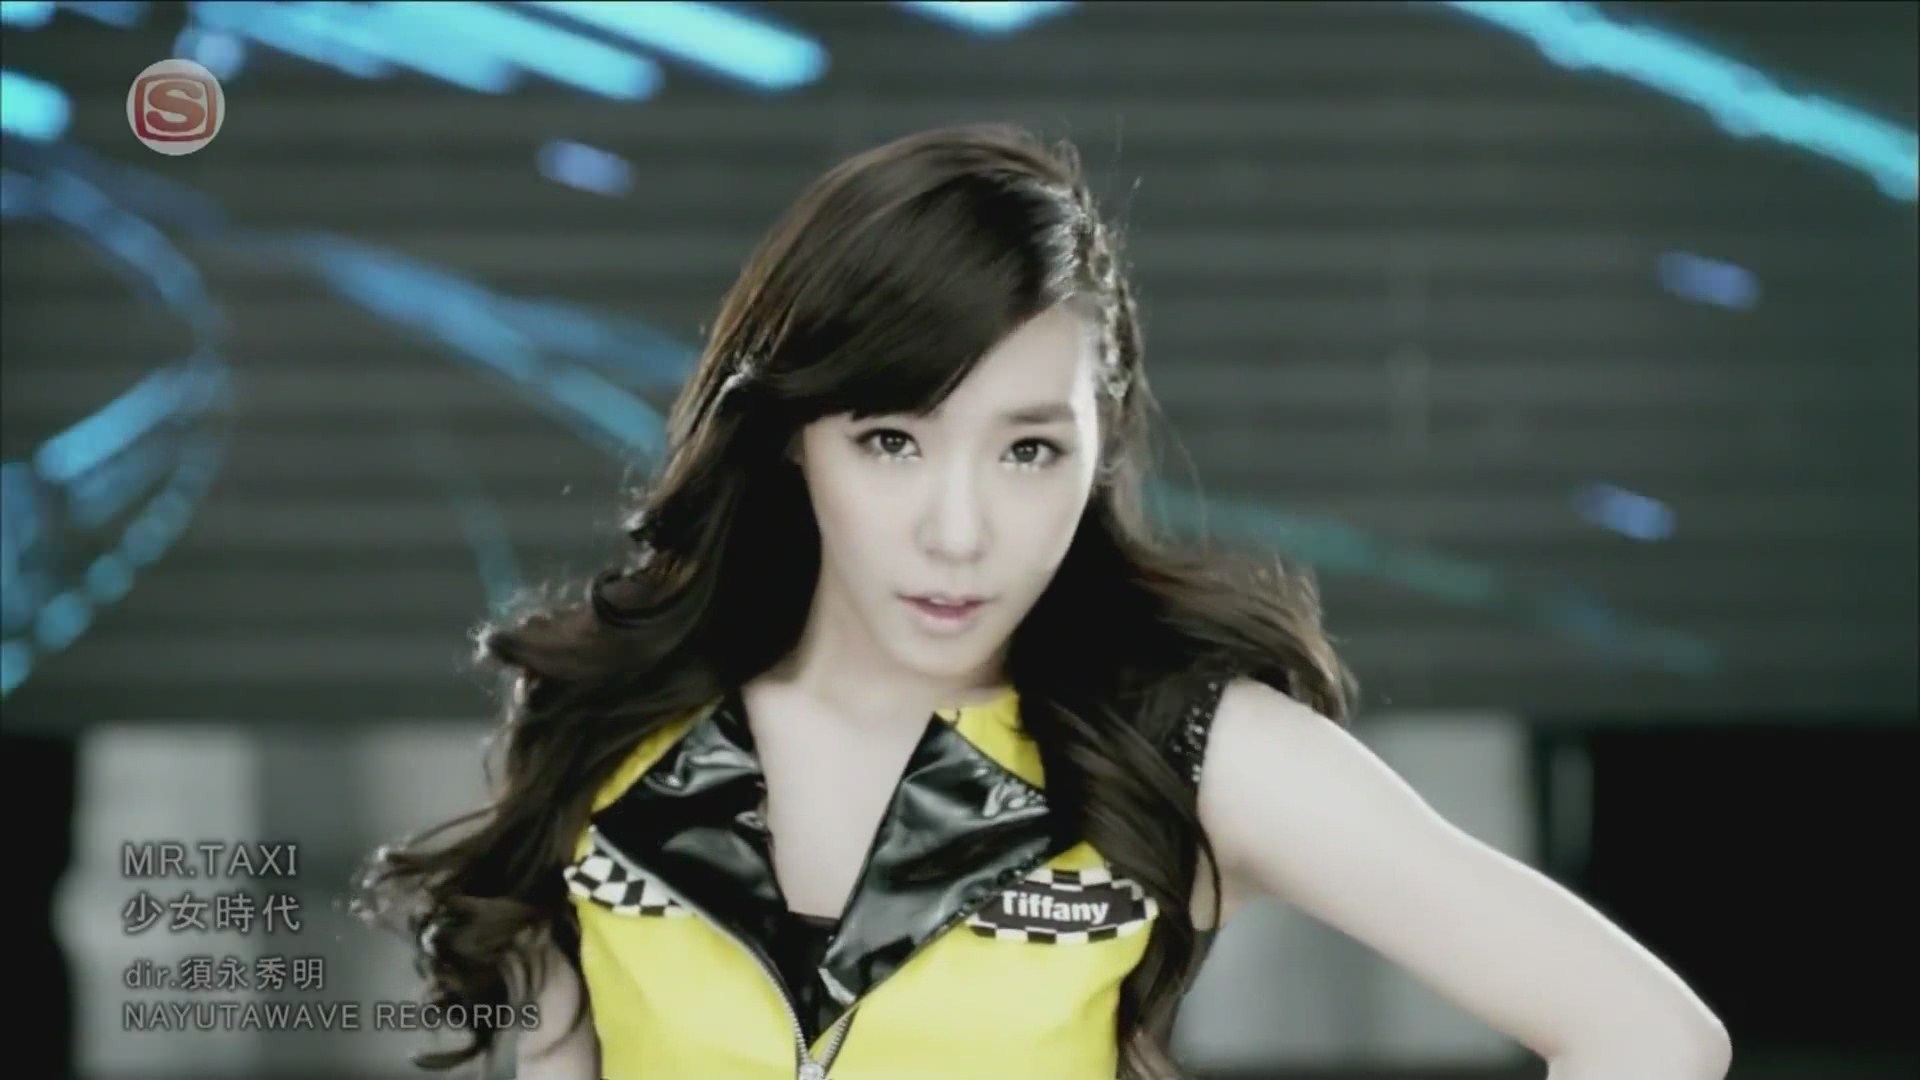 Tiffany Mr. Taxi Music Video